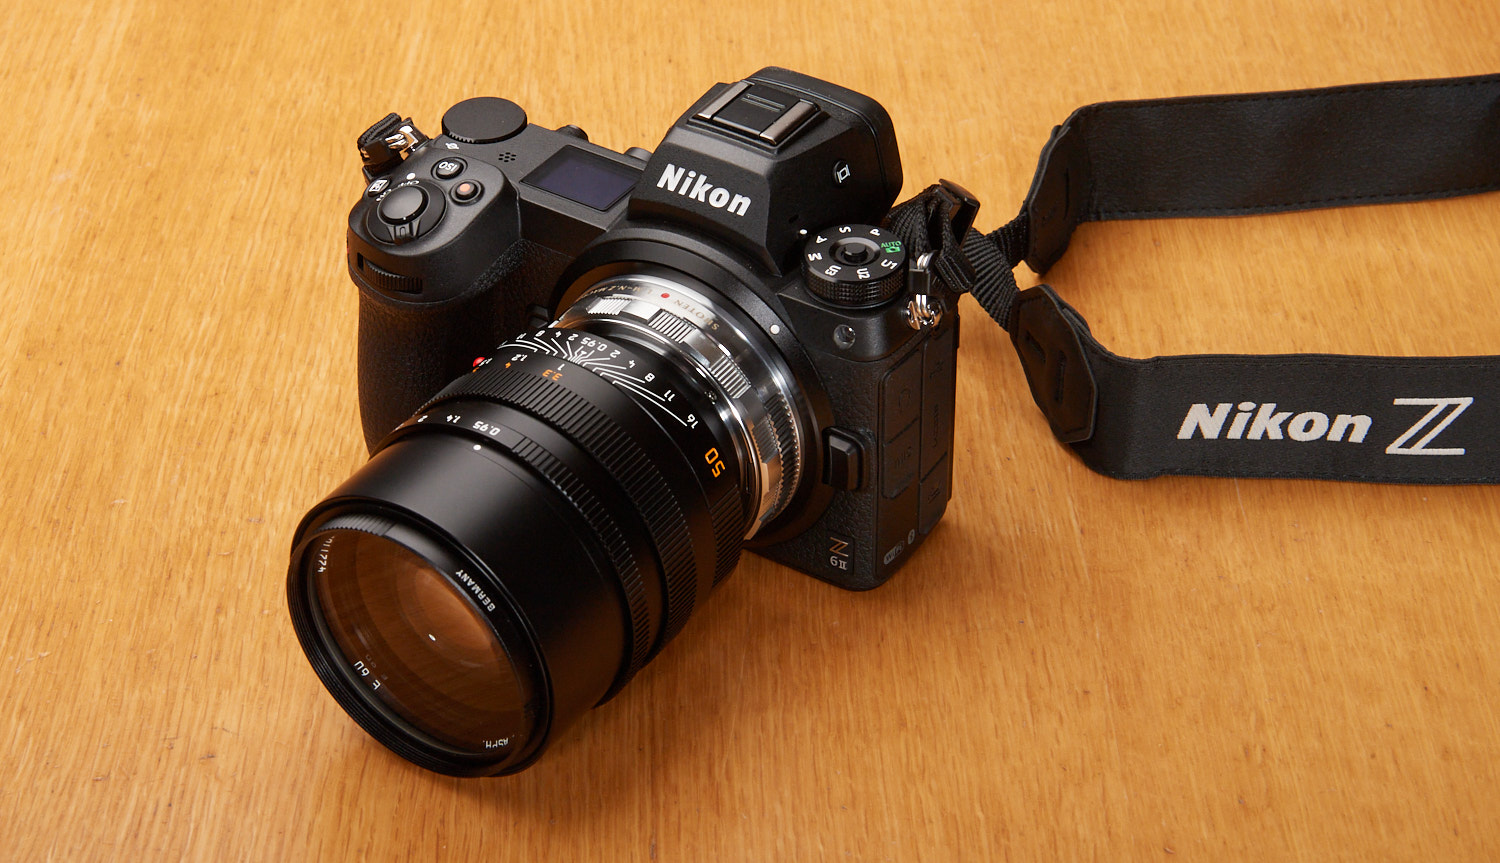 Nikon Z6ii with Noctilux-M 50mm f/0.95